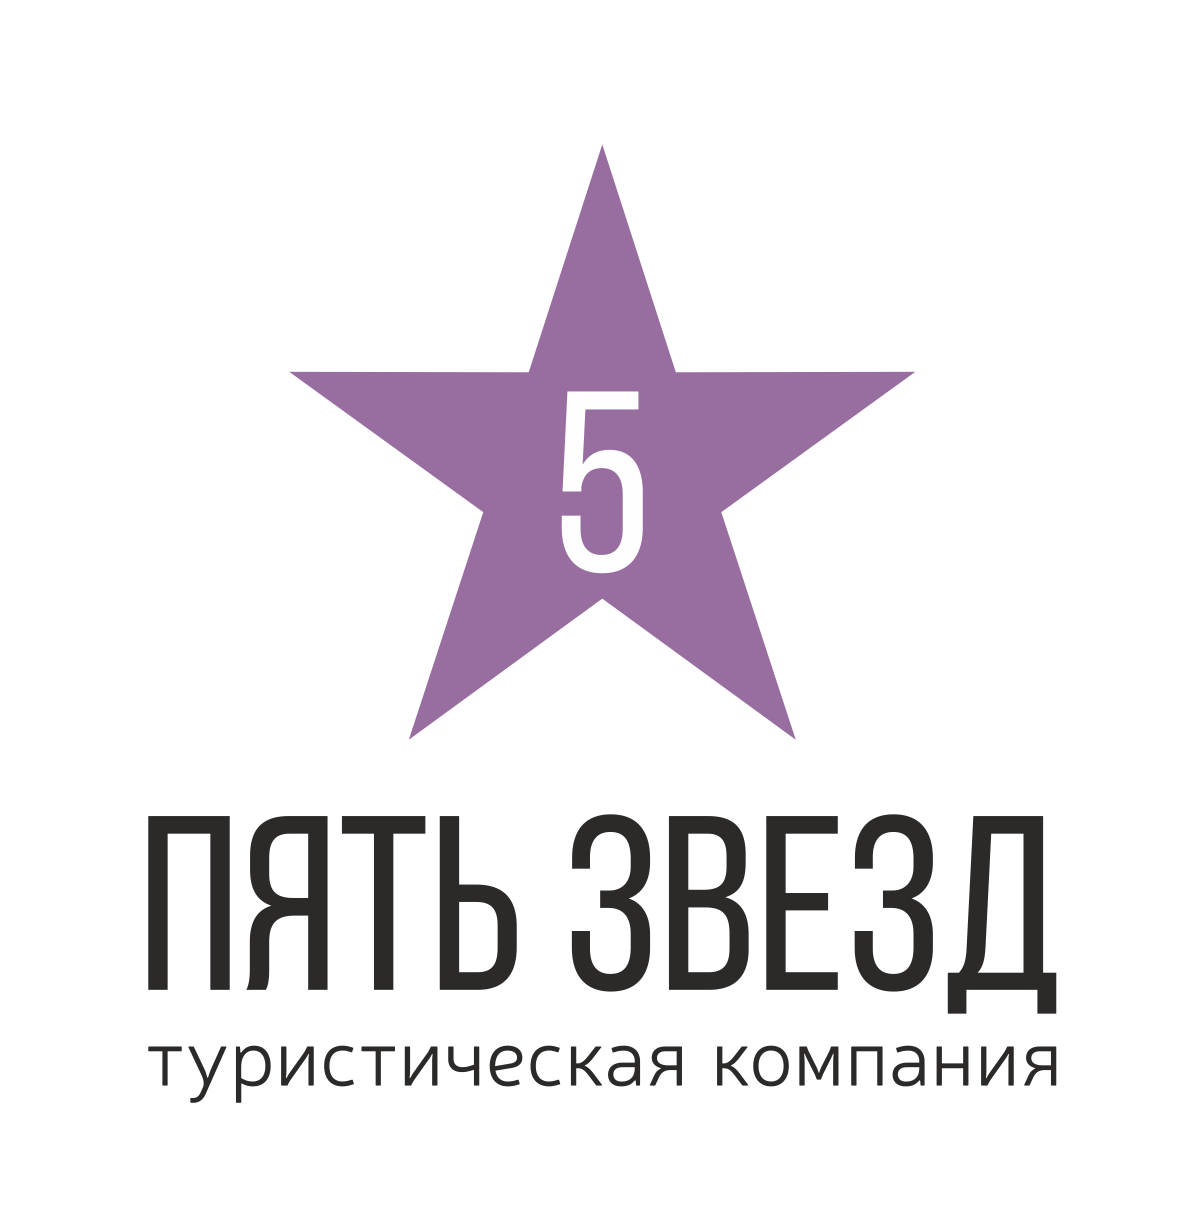 5 stars ru